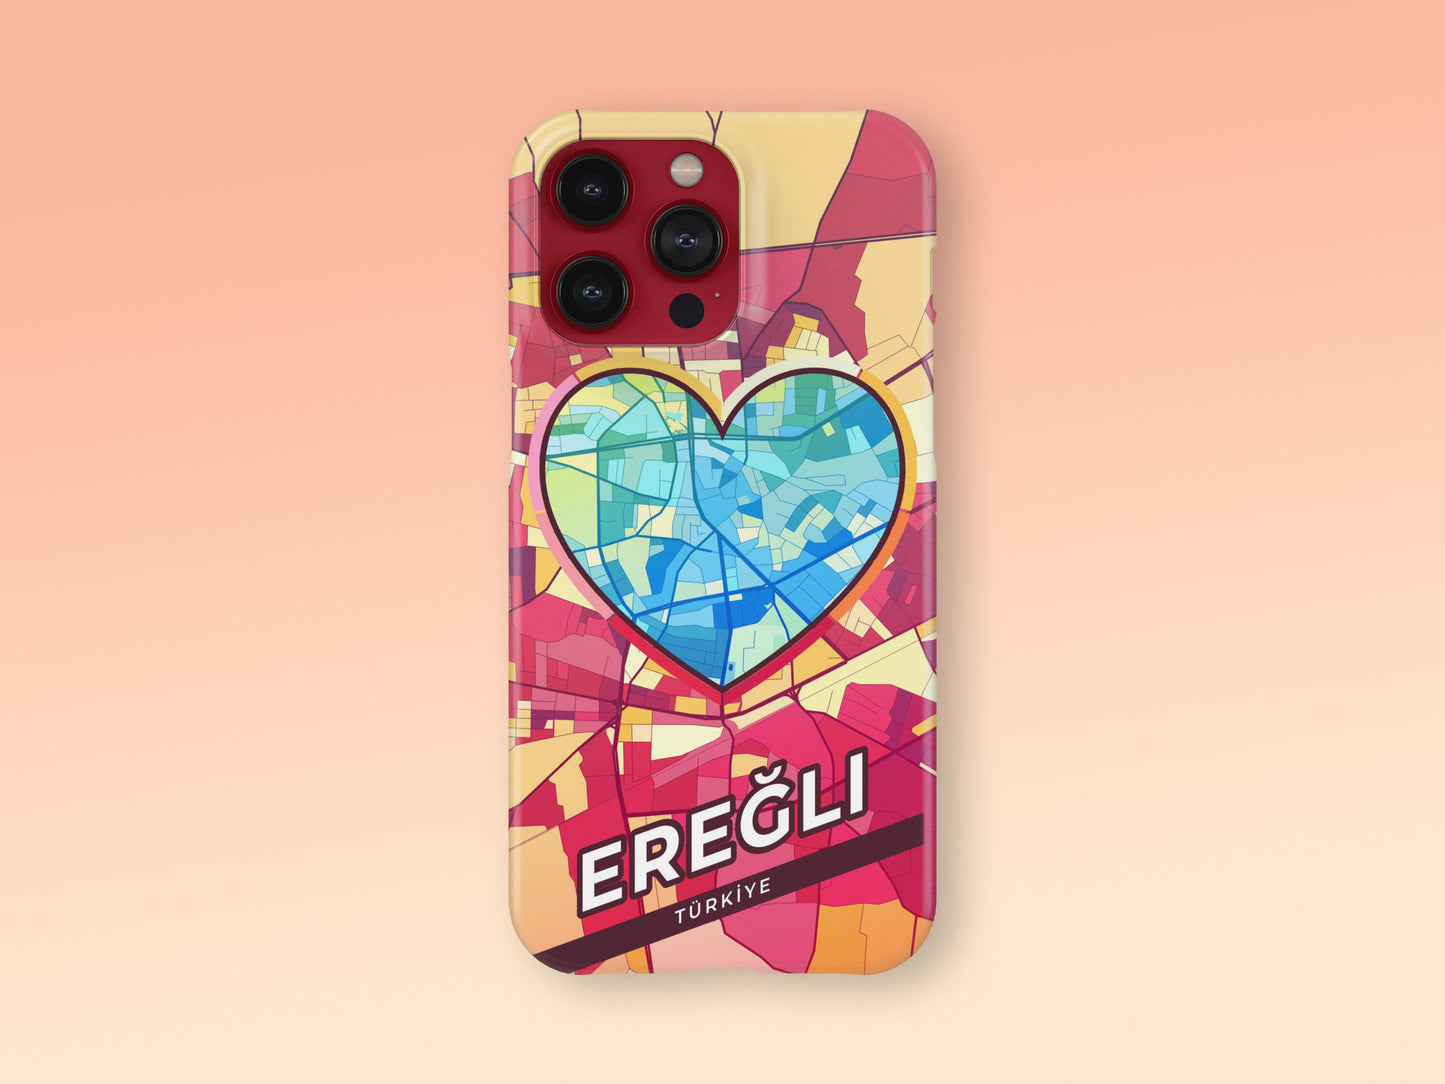 Ereğli Turkey slim phone case with colorful icon. Birthday, wedding or housewarming gift. Couple match cases. 2